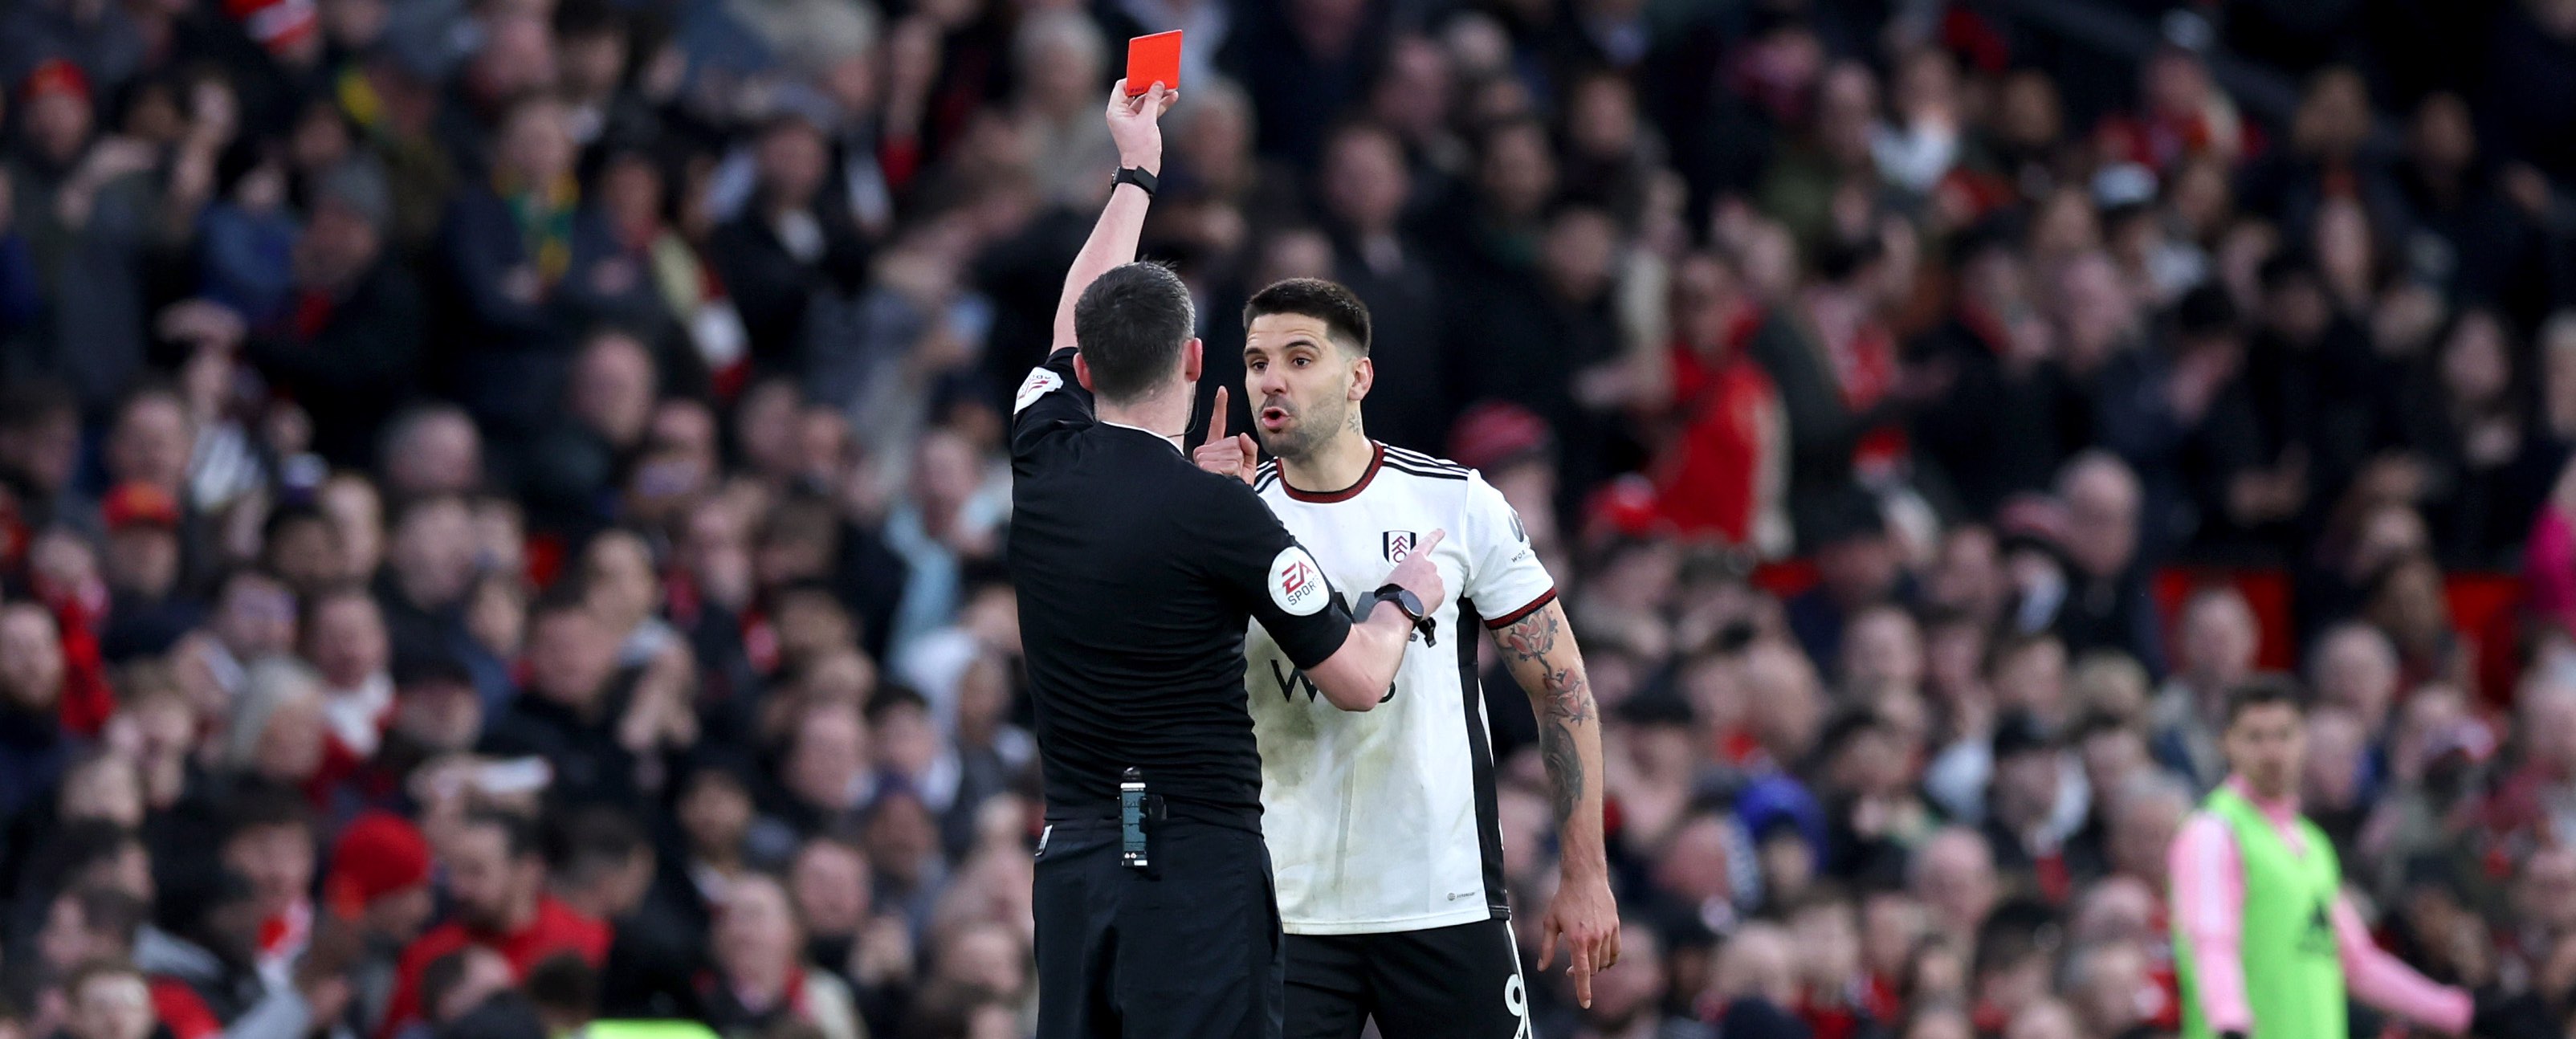 Marco Silva dan Aleksandar Mitrovic Minta Maaf Pasca Insiden Kartu Merah Lawan Manchester United